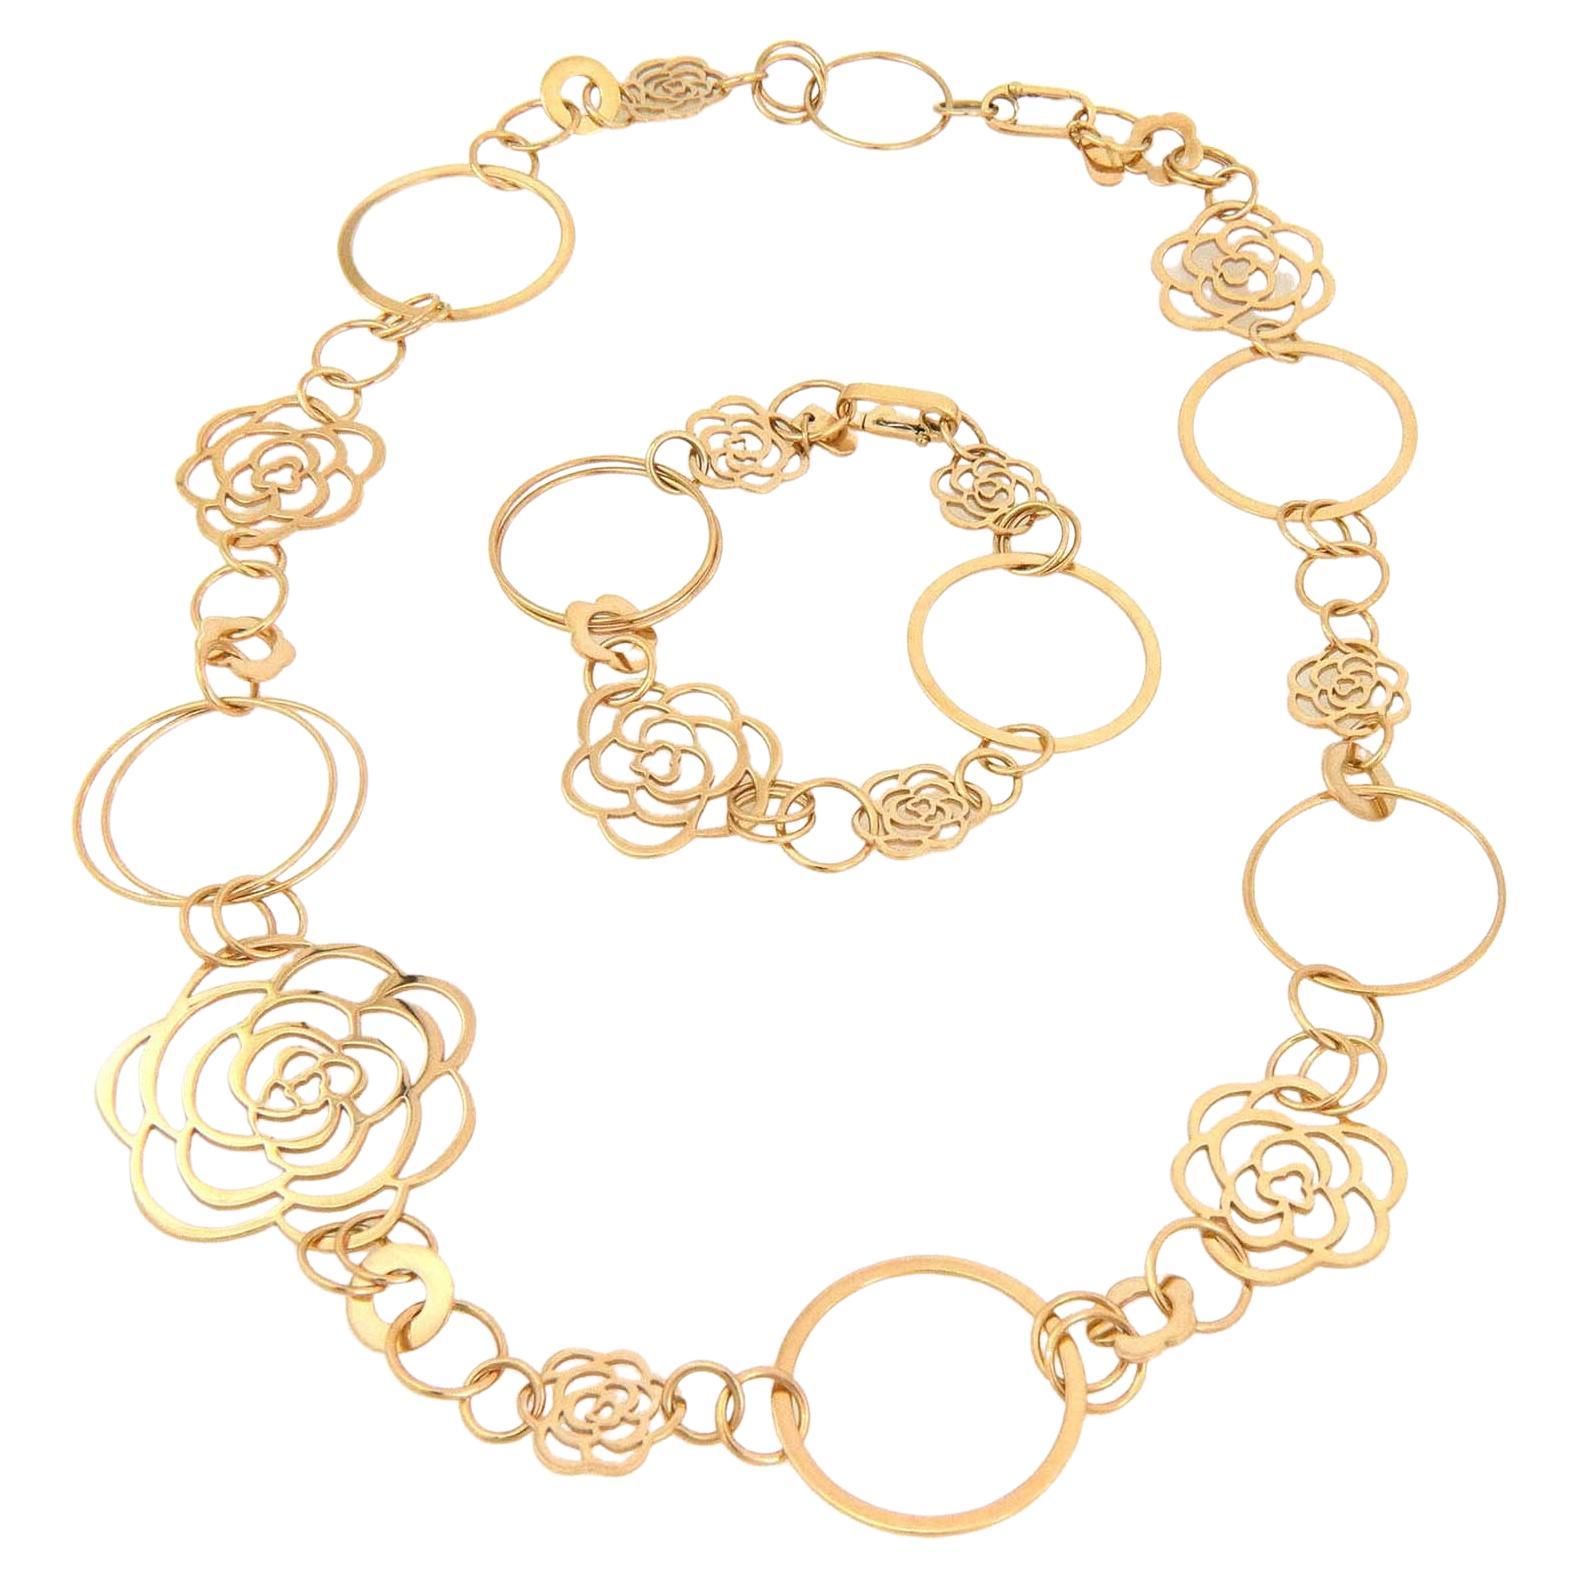 Chanel Necklace Set - 150 For Sale on 1stDibs